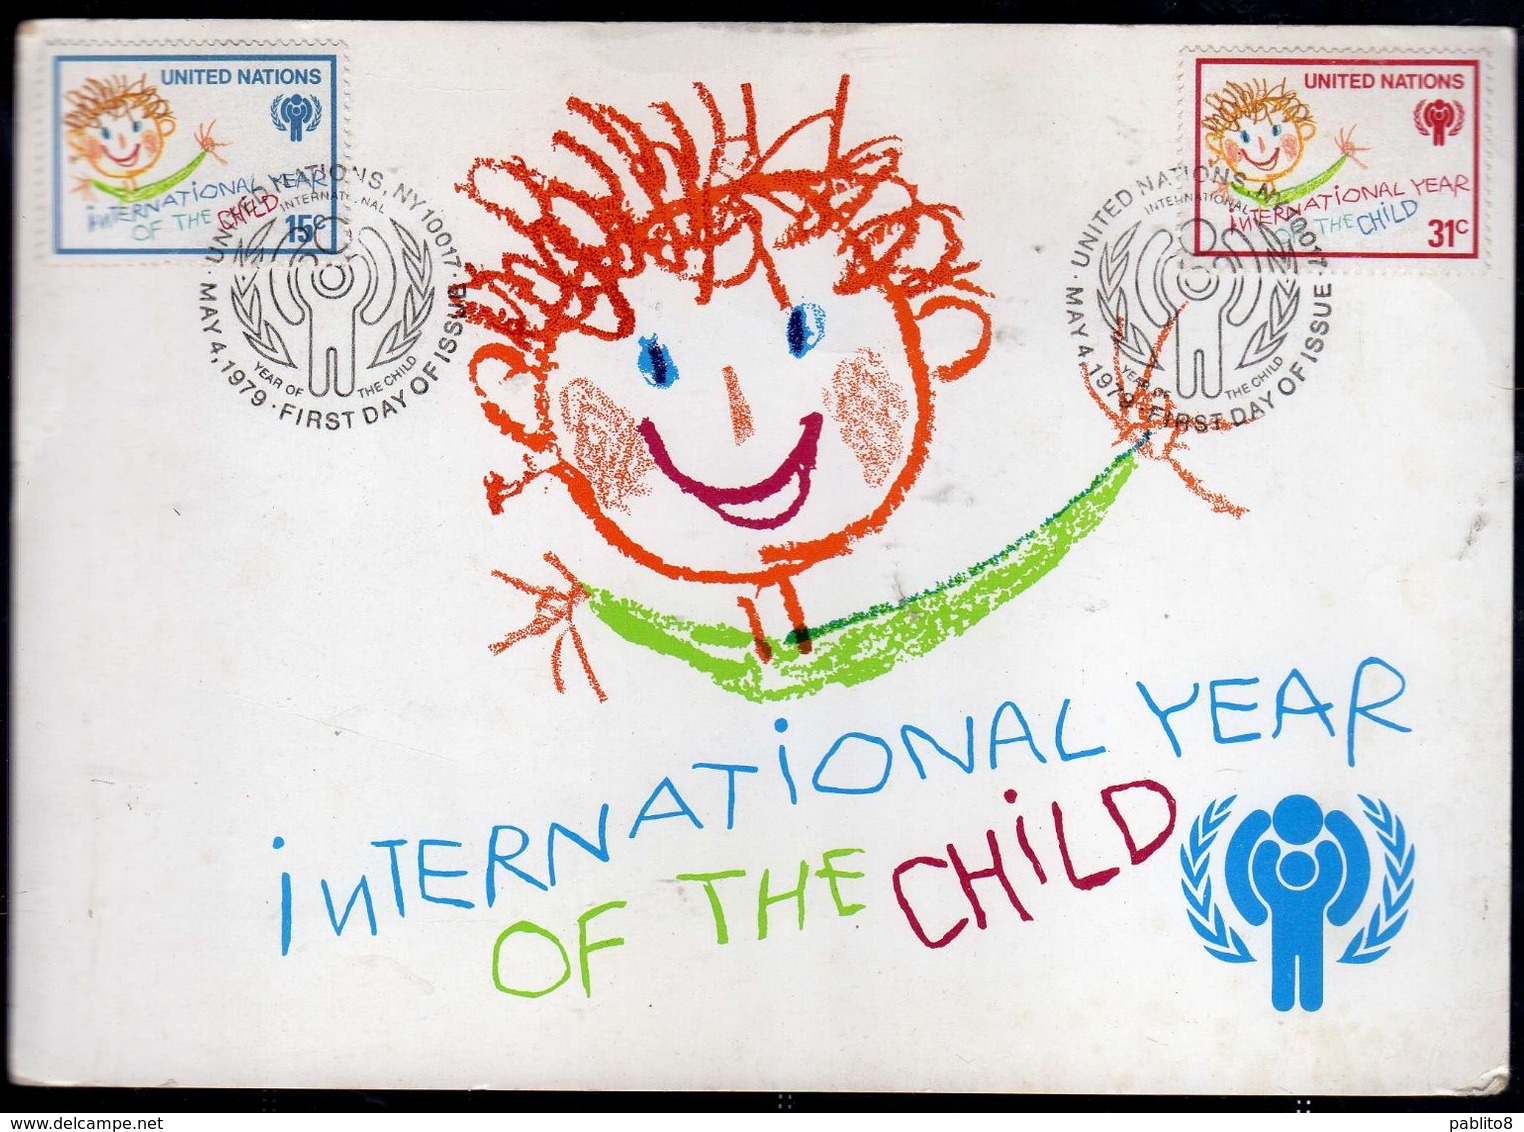 UNITED NATIONS NEW YORK ONU UN UNO 4 5 1979 INTERNATIONAL YEAR OF THE CHILD COMPLETE SET FDC MAXI CARD CARTOLINA MAXIMUM - Cartes-maximum